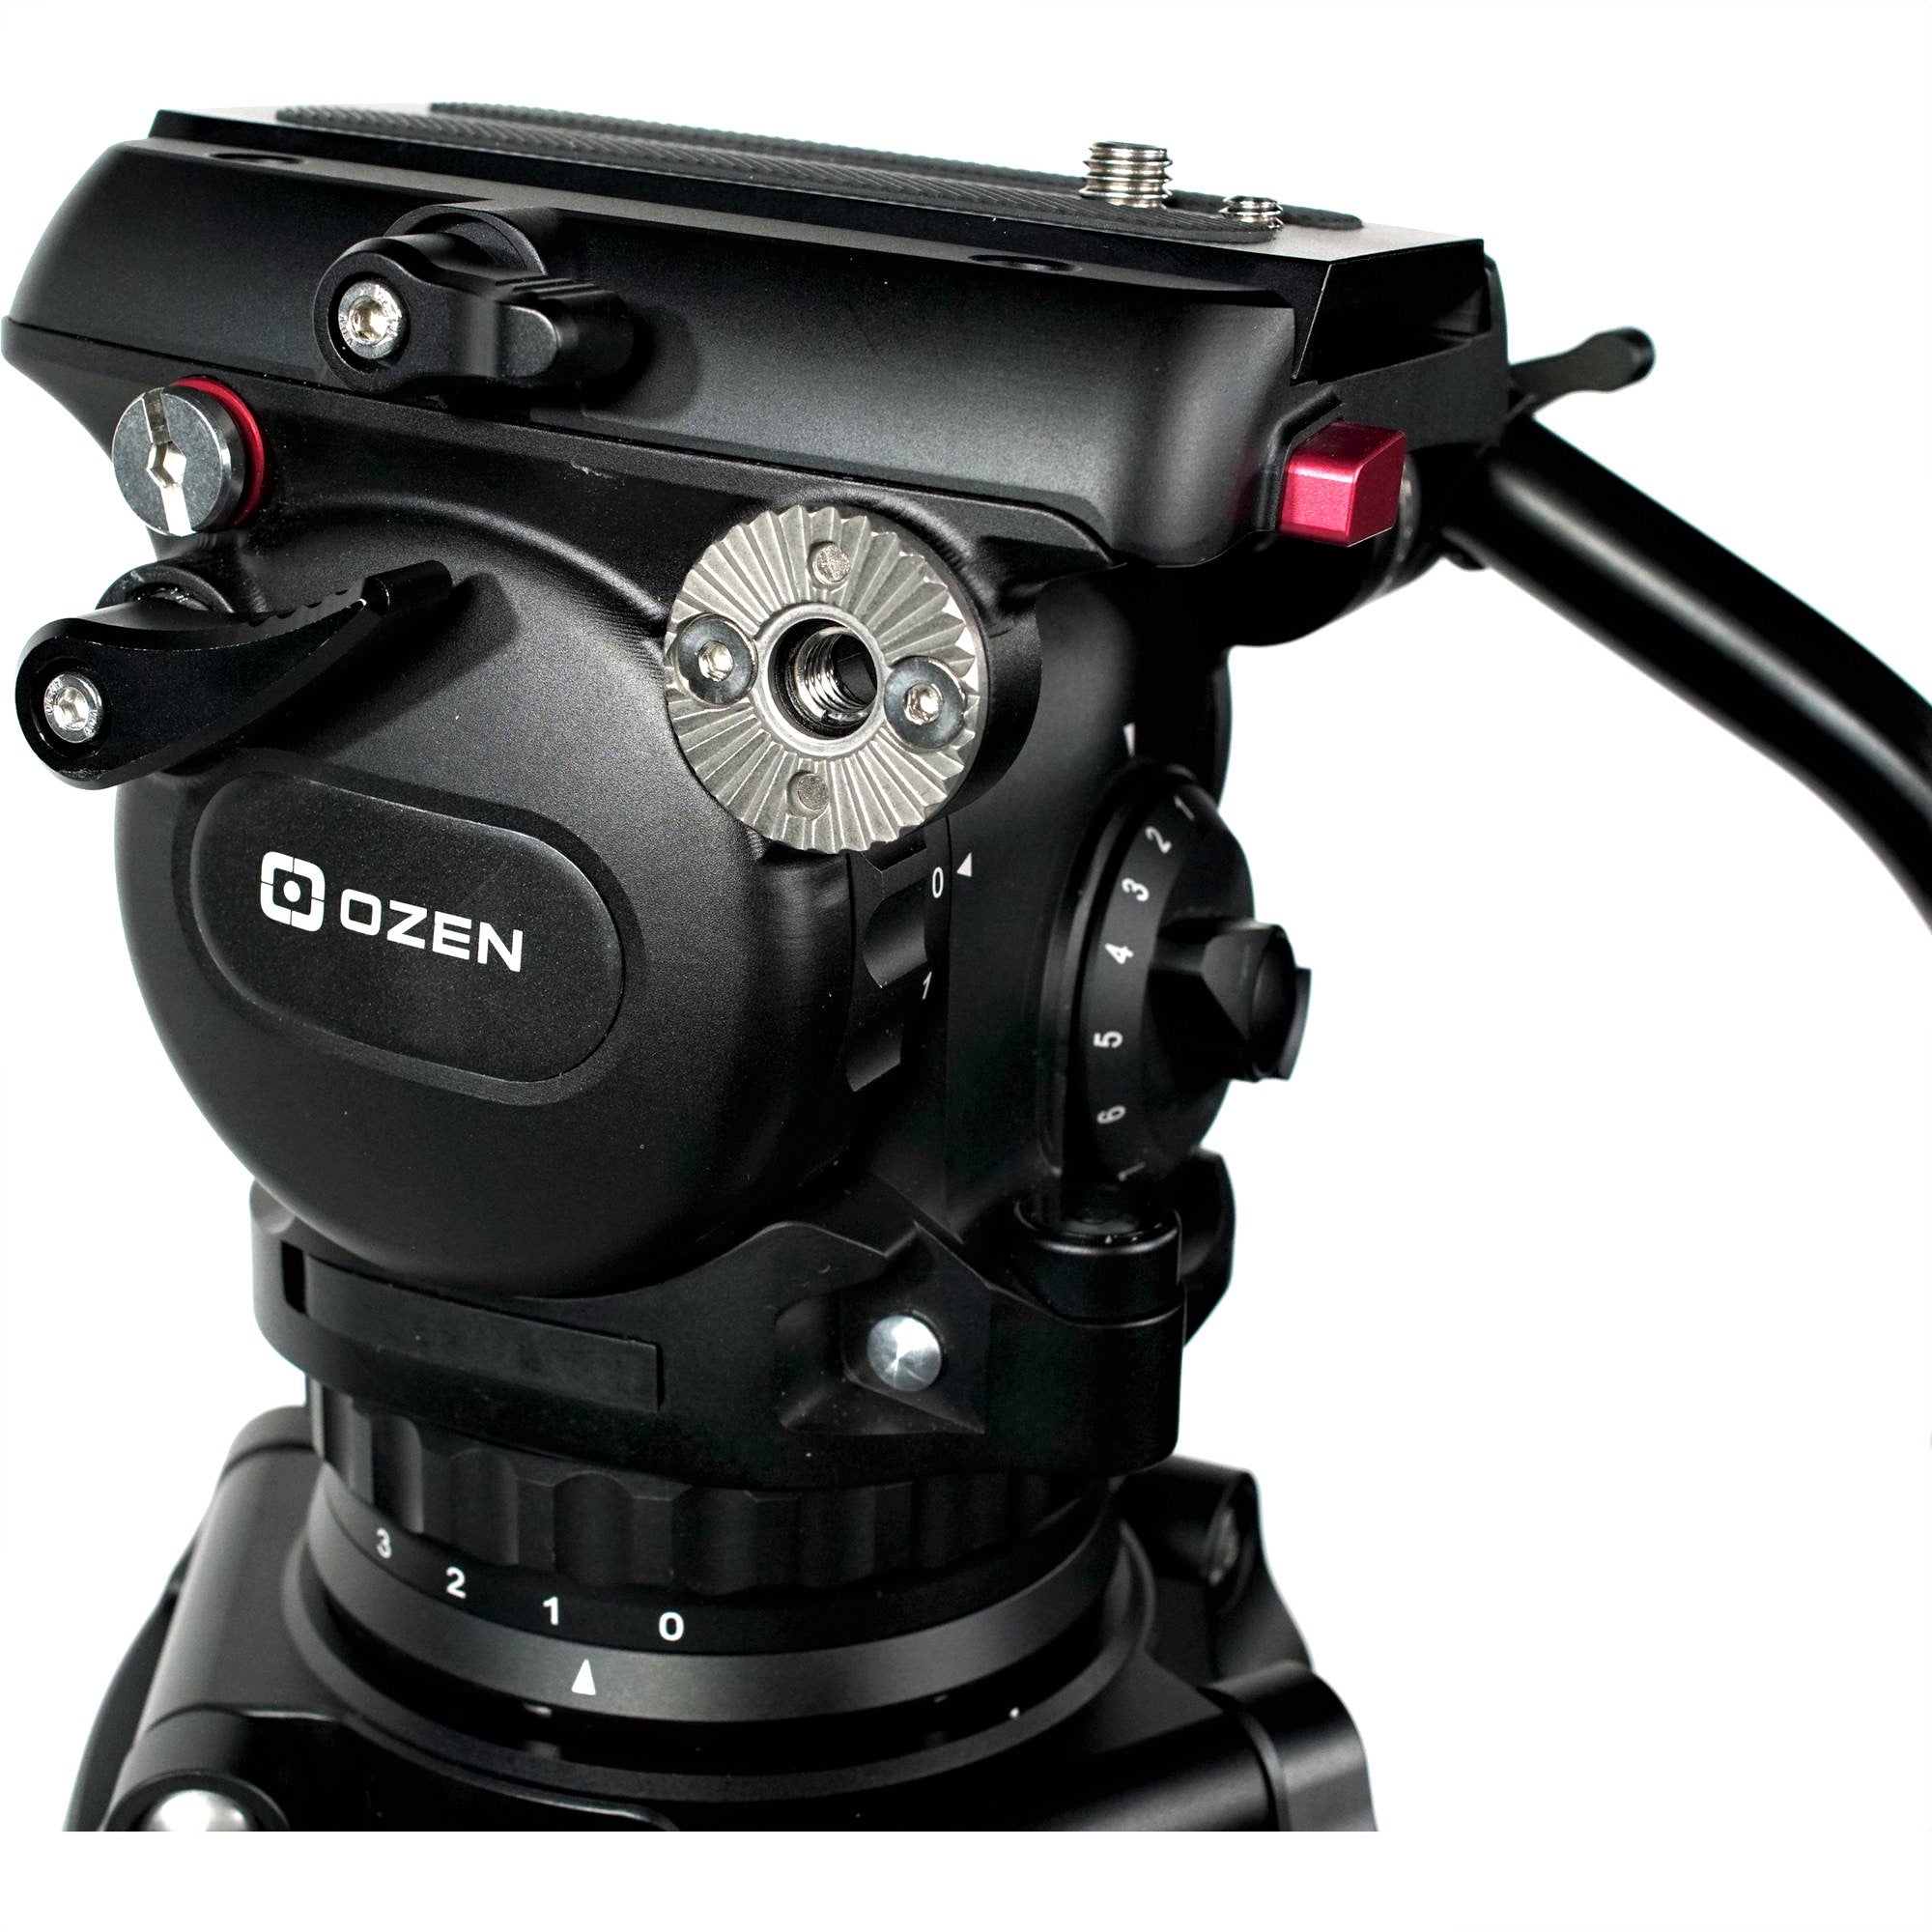 OZEN Agile 8S Fluid Head in a Close-Up View